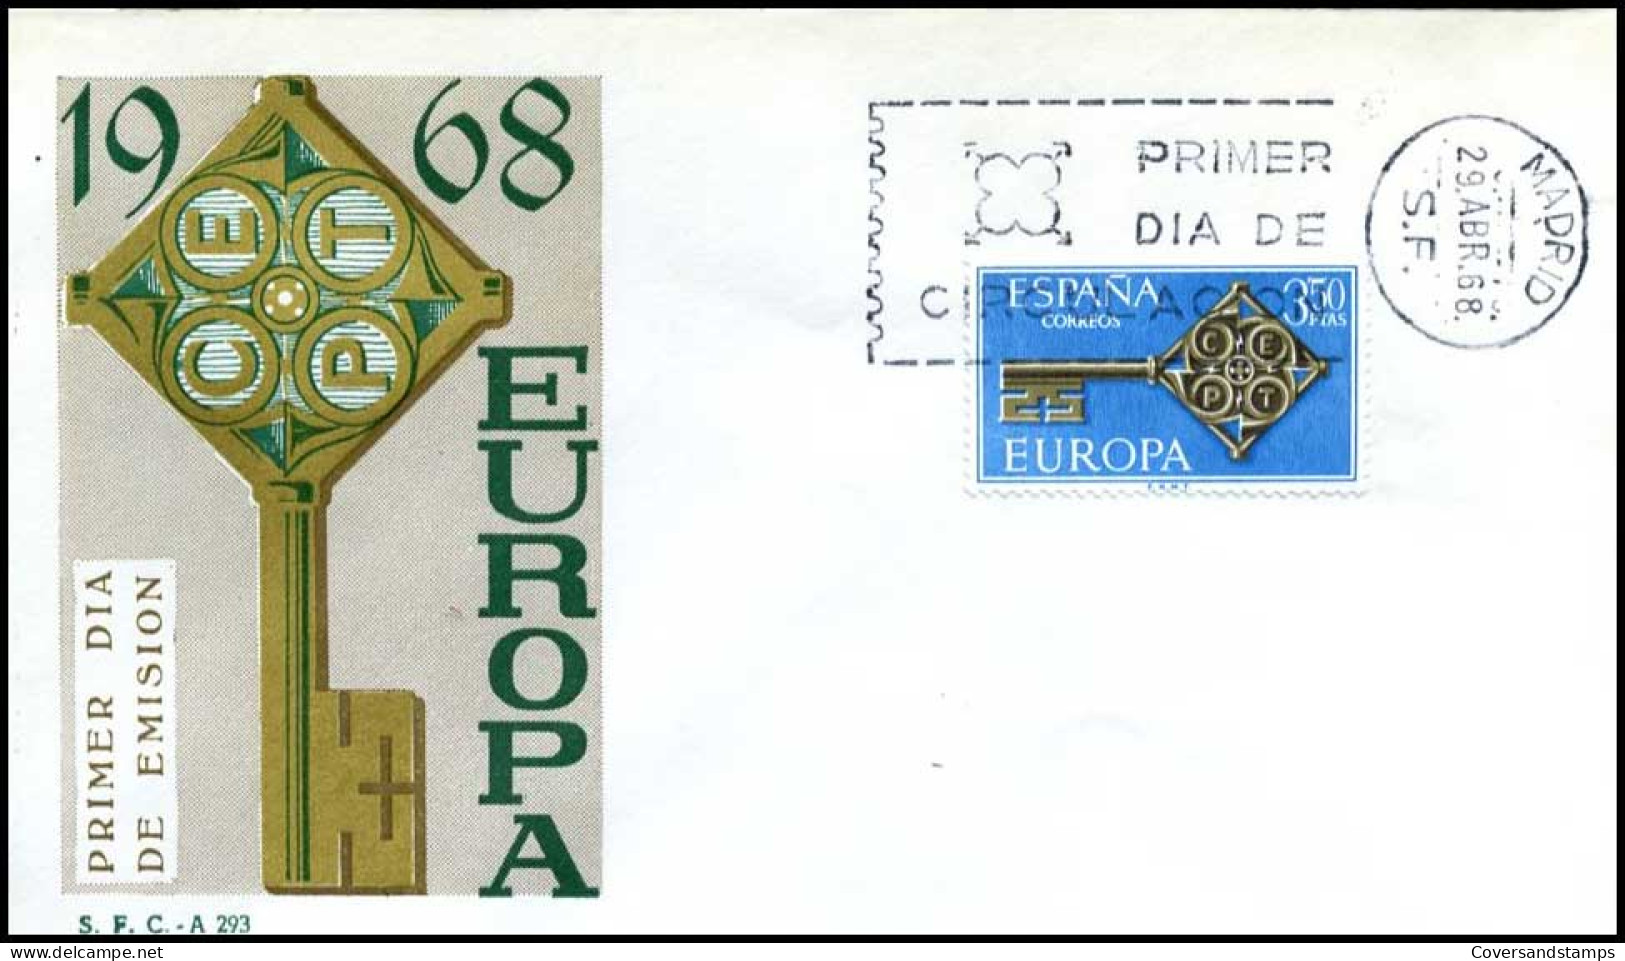  Spanje - FDC - Europa CEPT 1968 - 1968